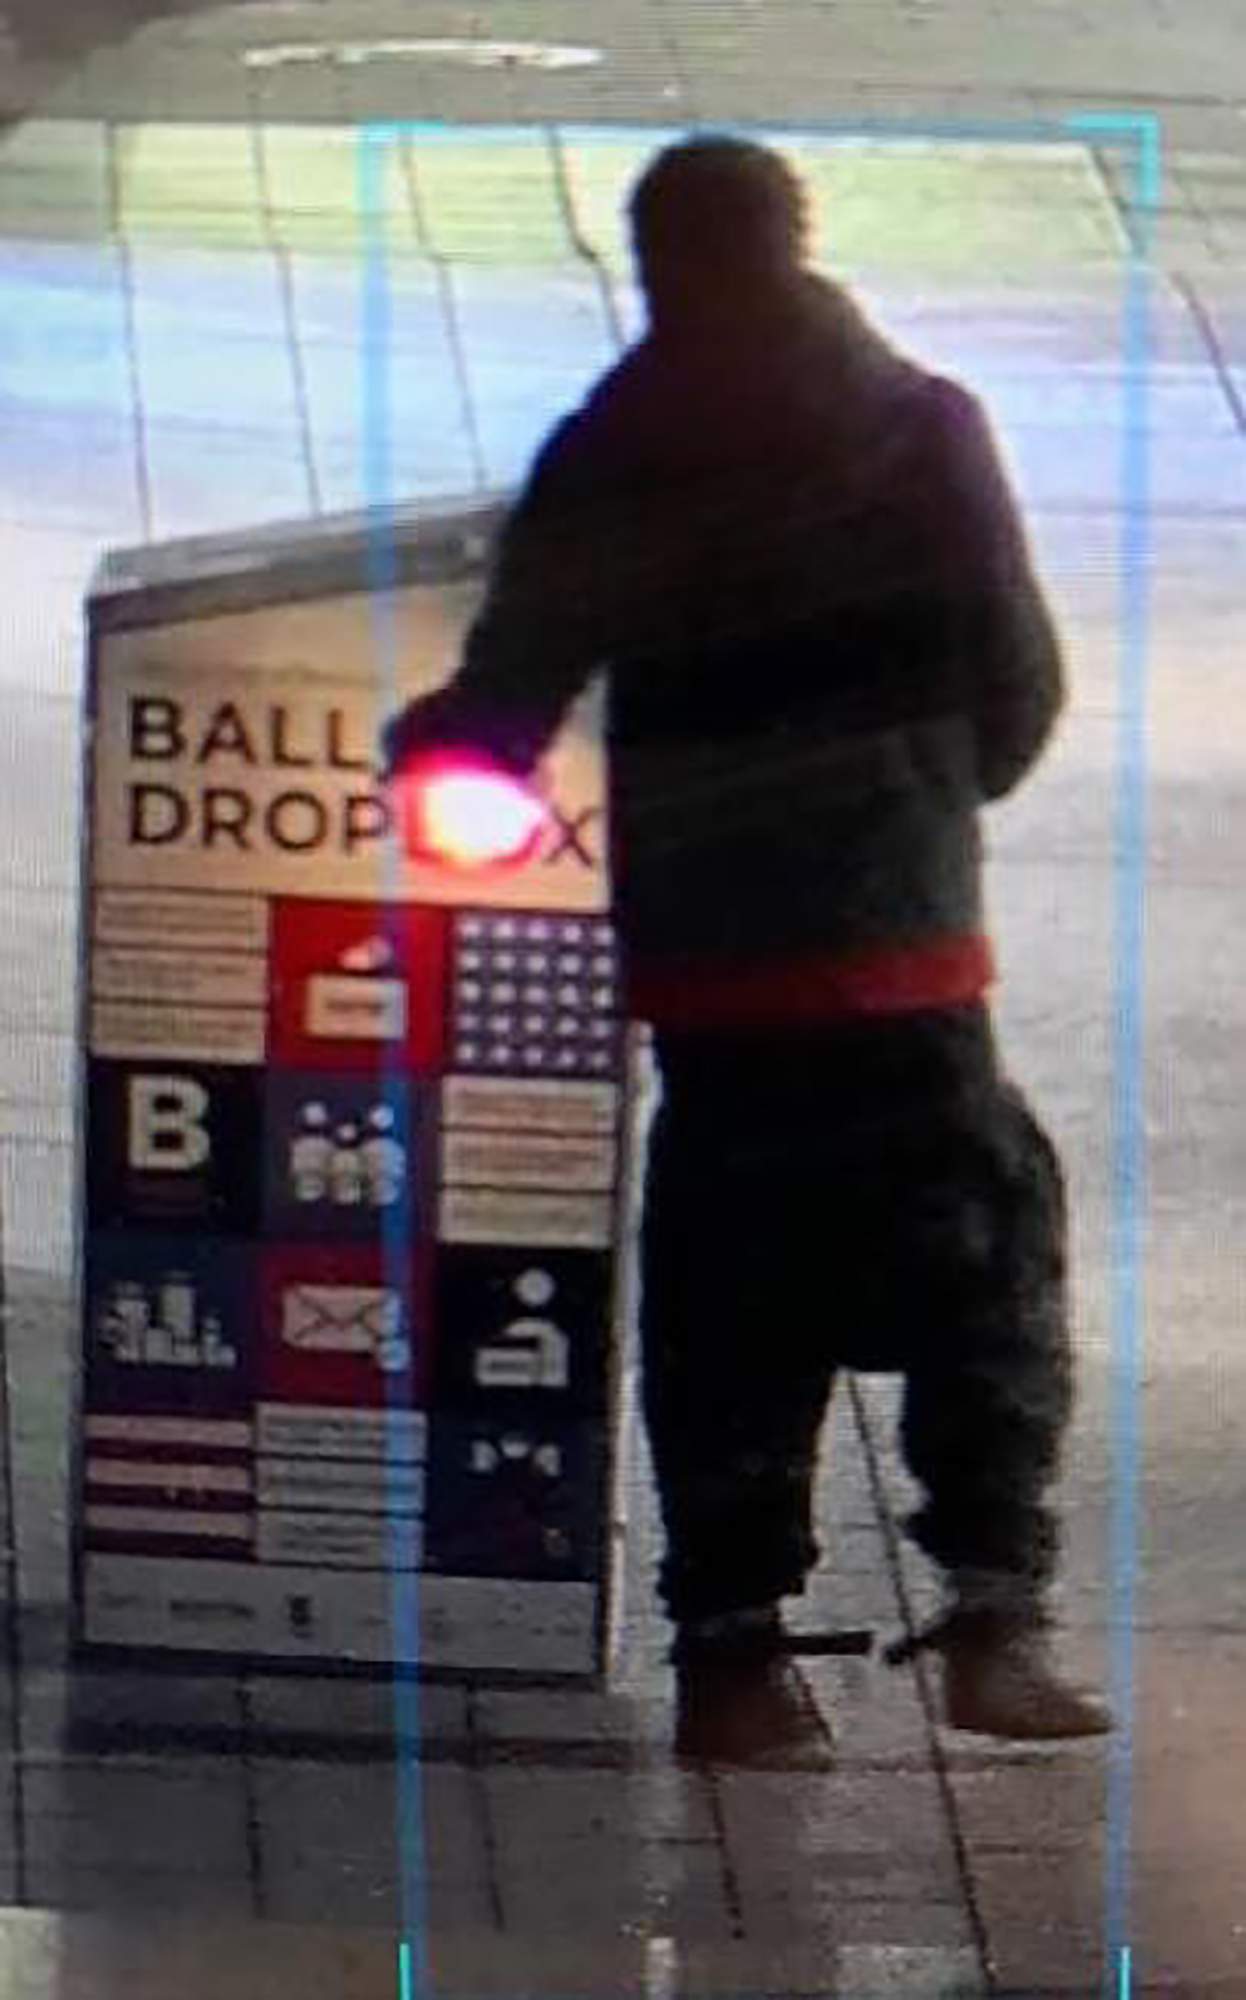 Fire set in Boston ballot drop box; FBI asked to probe